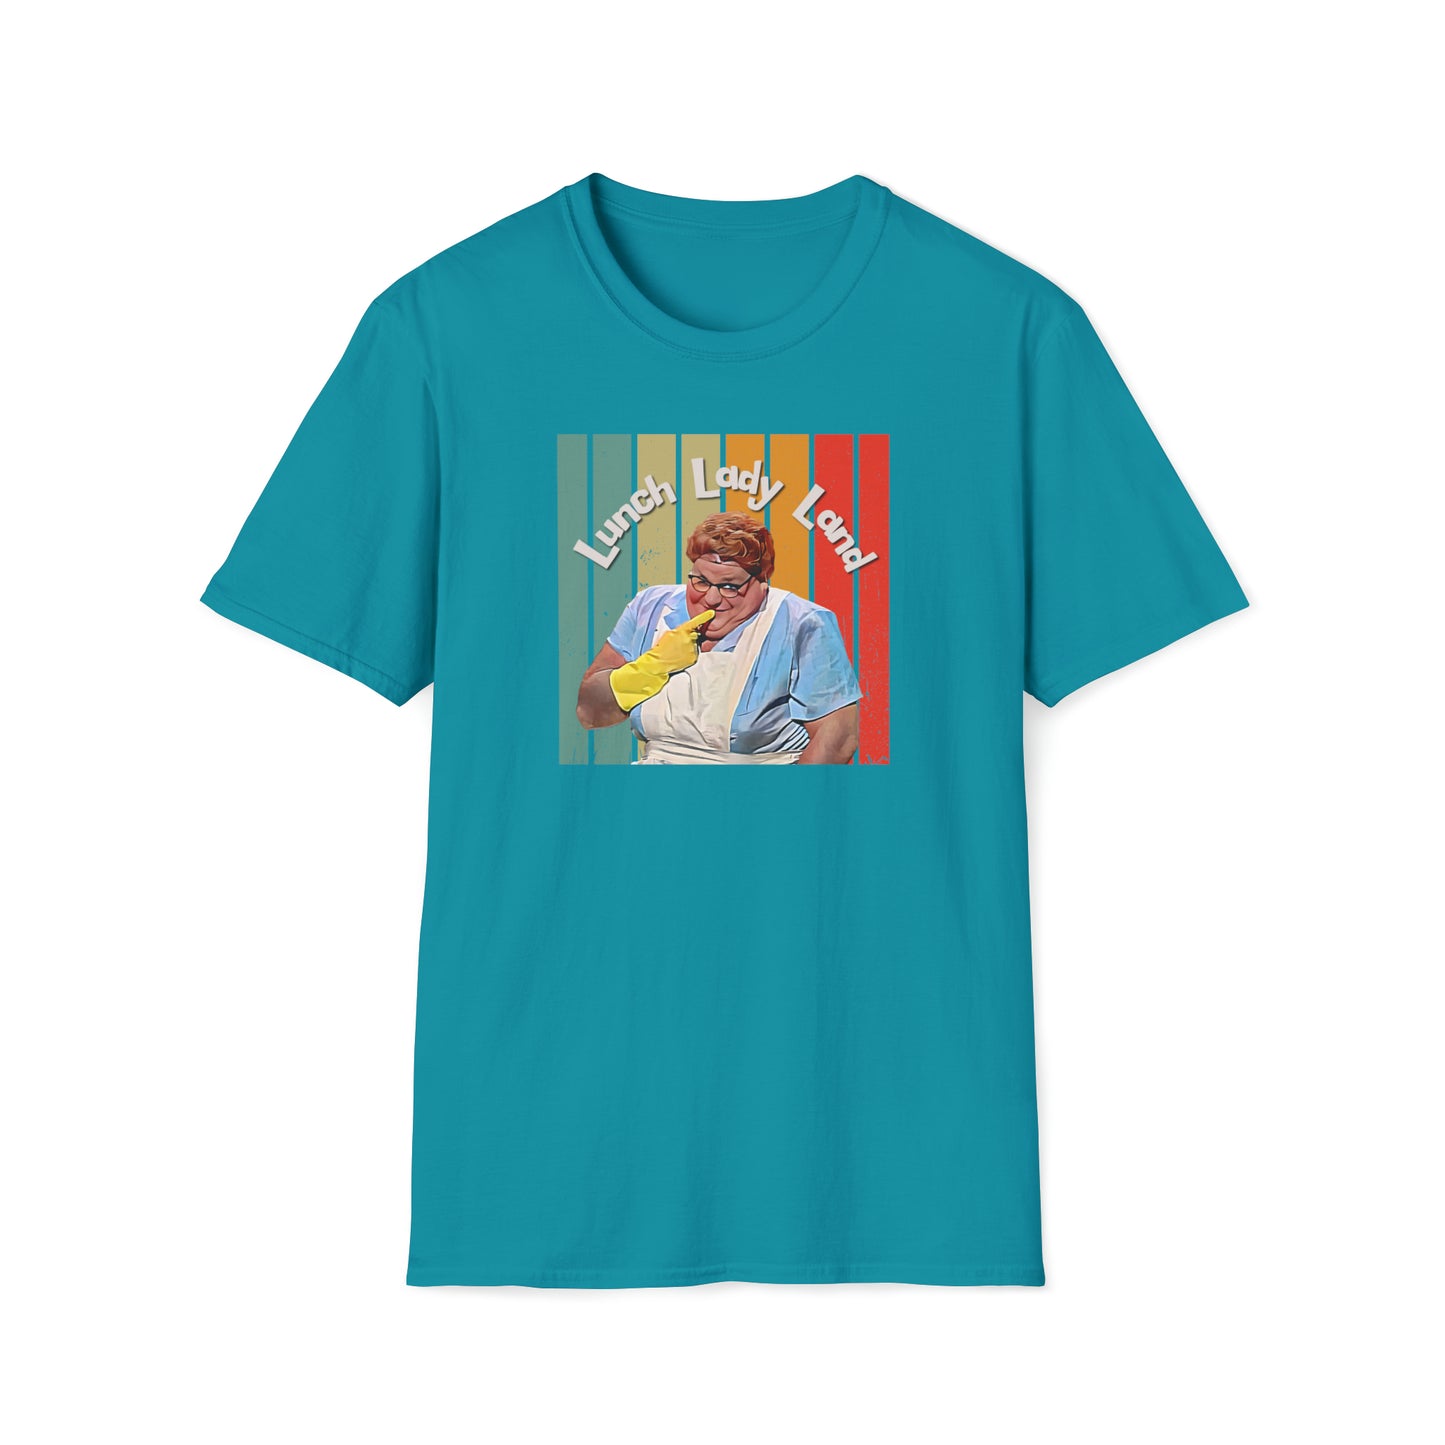 Lunch lady, Chris Farley, Adam Sandler, SNL, Old School Humor, Shirt